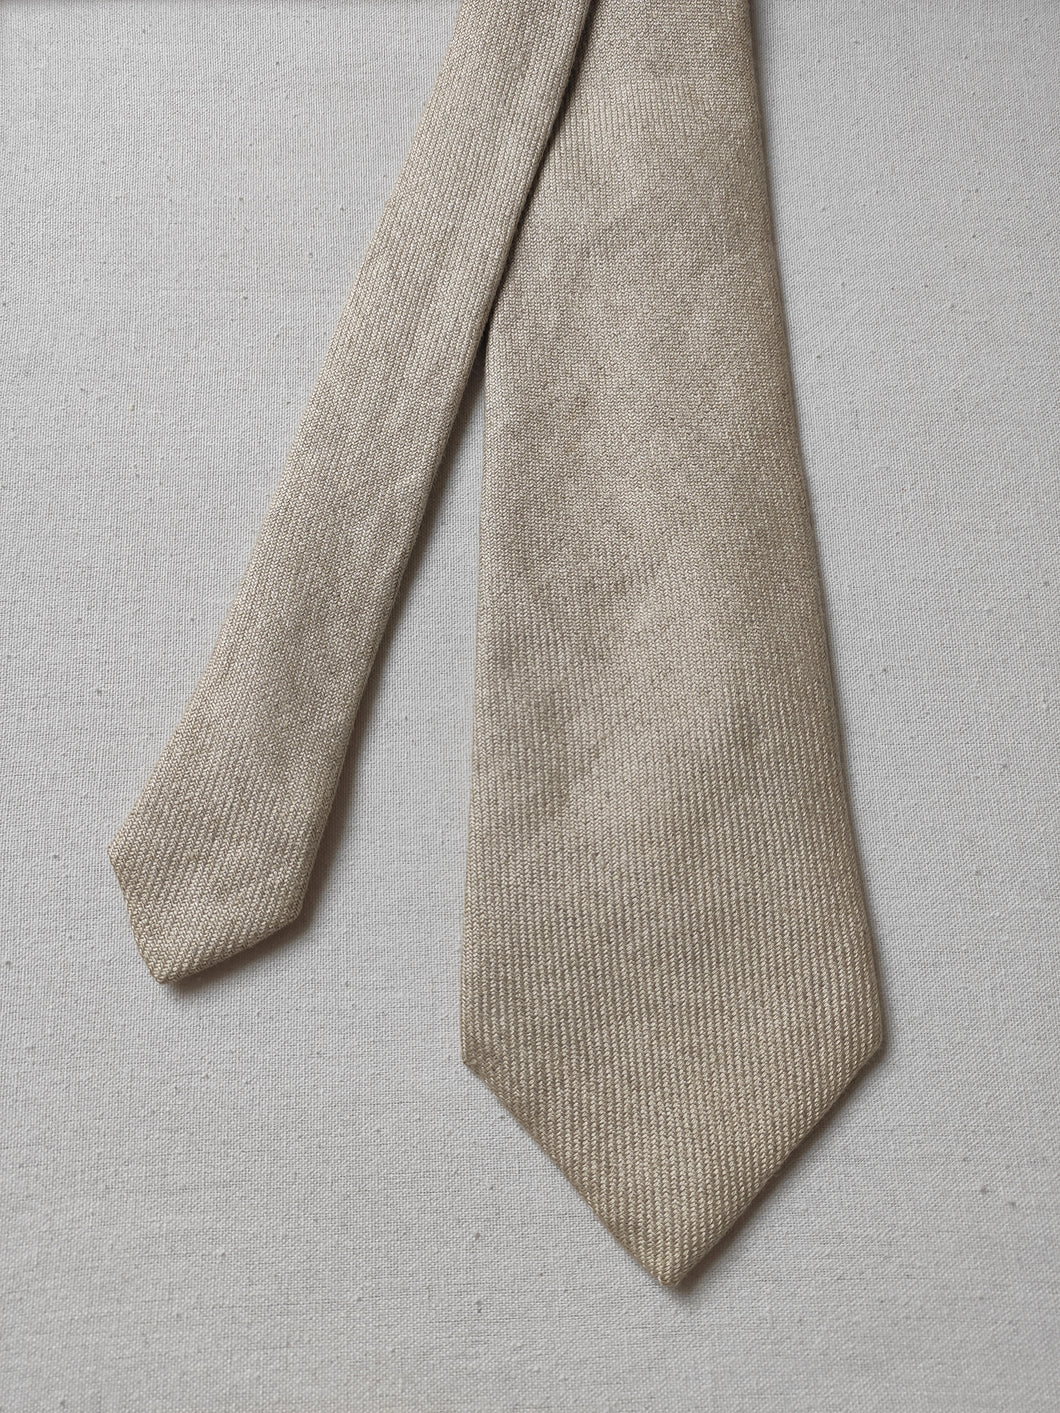 Drake's X Rosa & Teixeira cravate beige 100% lin Made in England